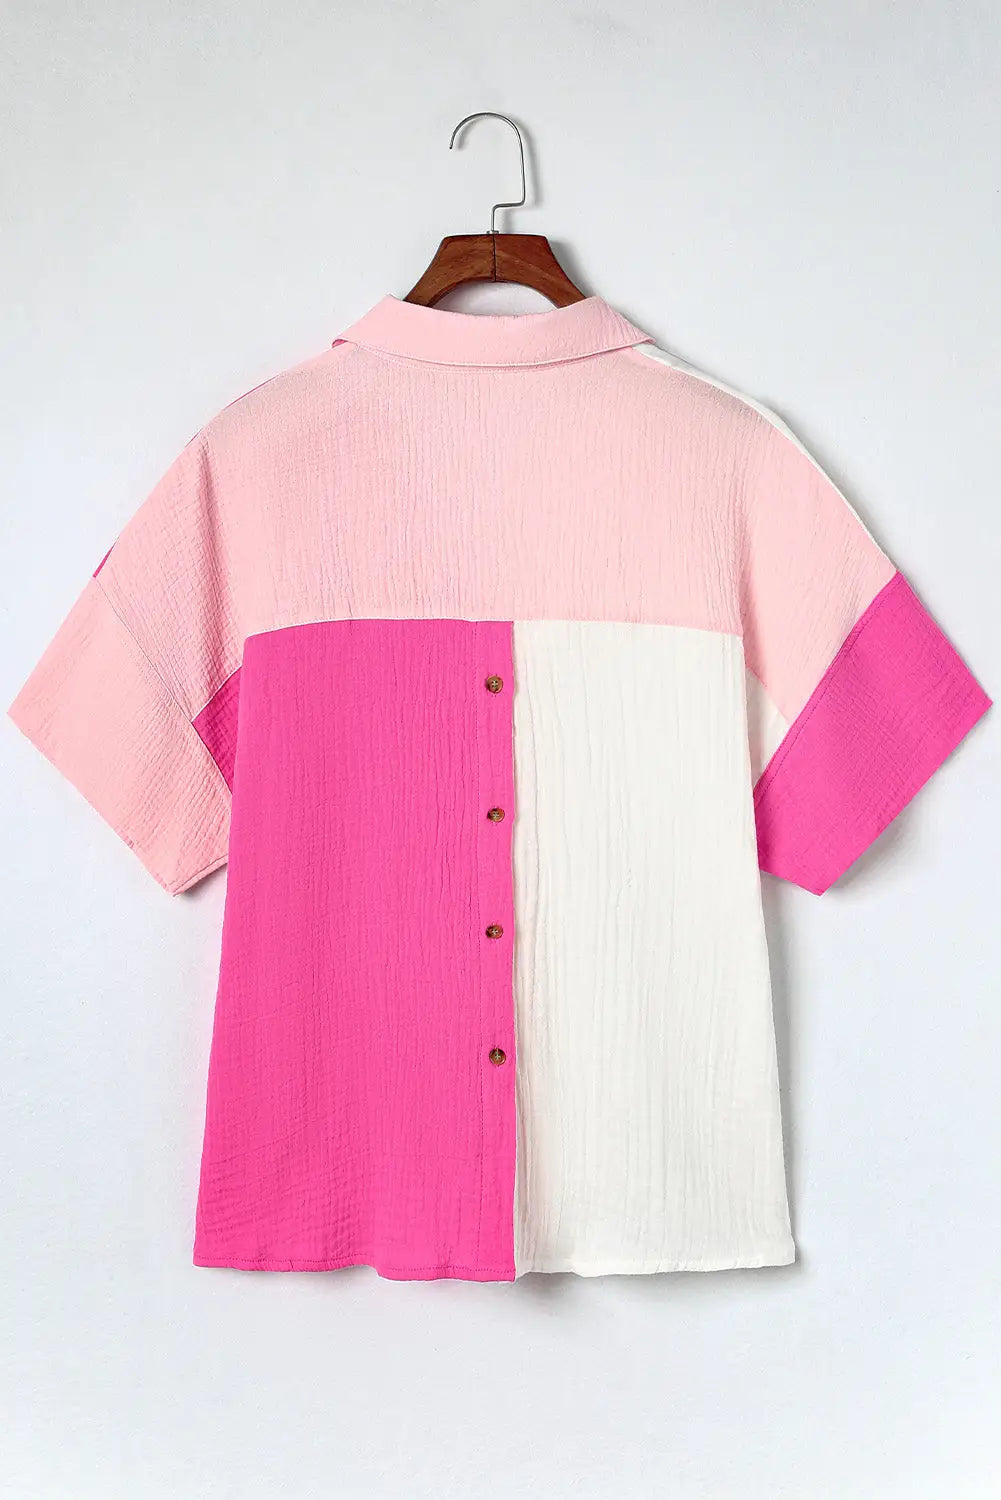 Rose collared neck color block polo shirt - tops